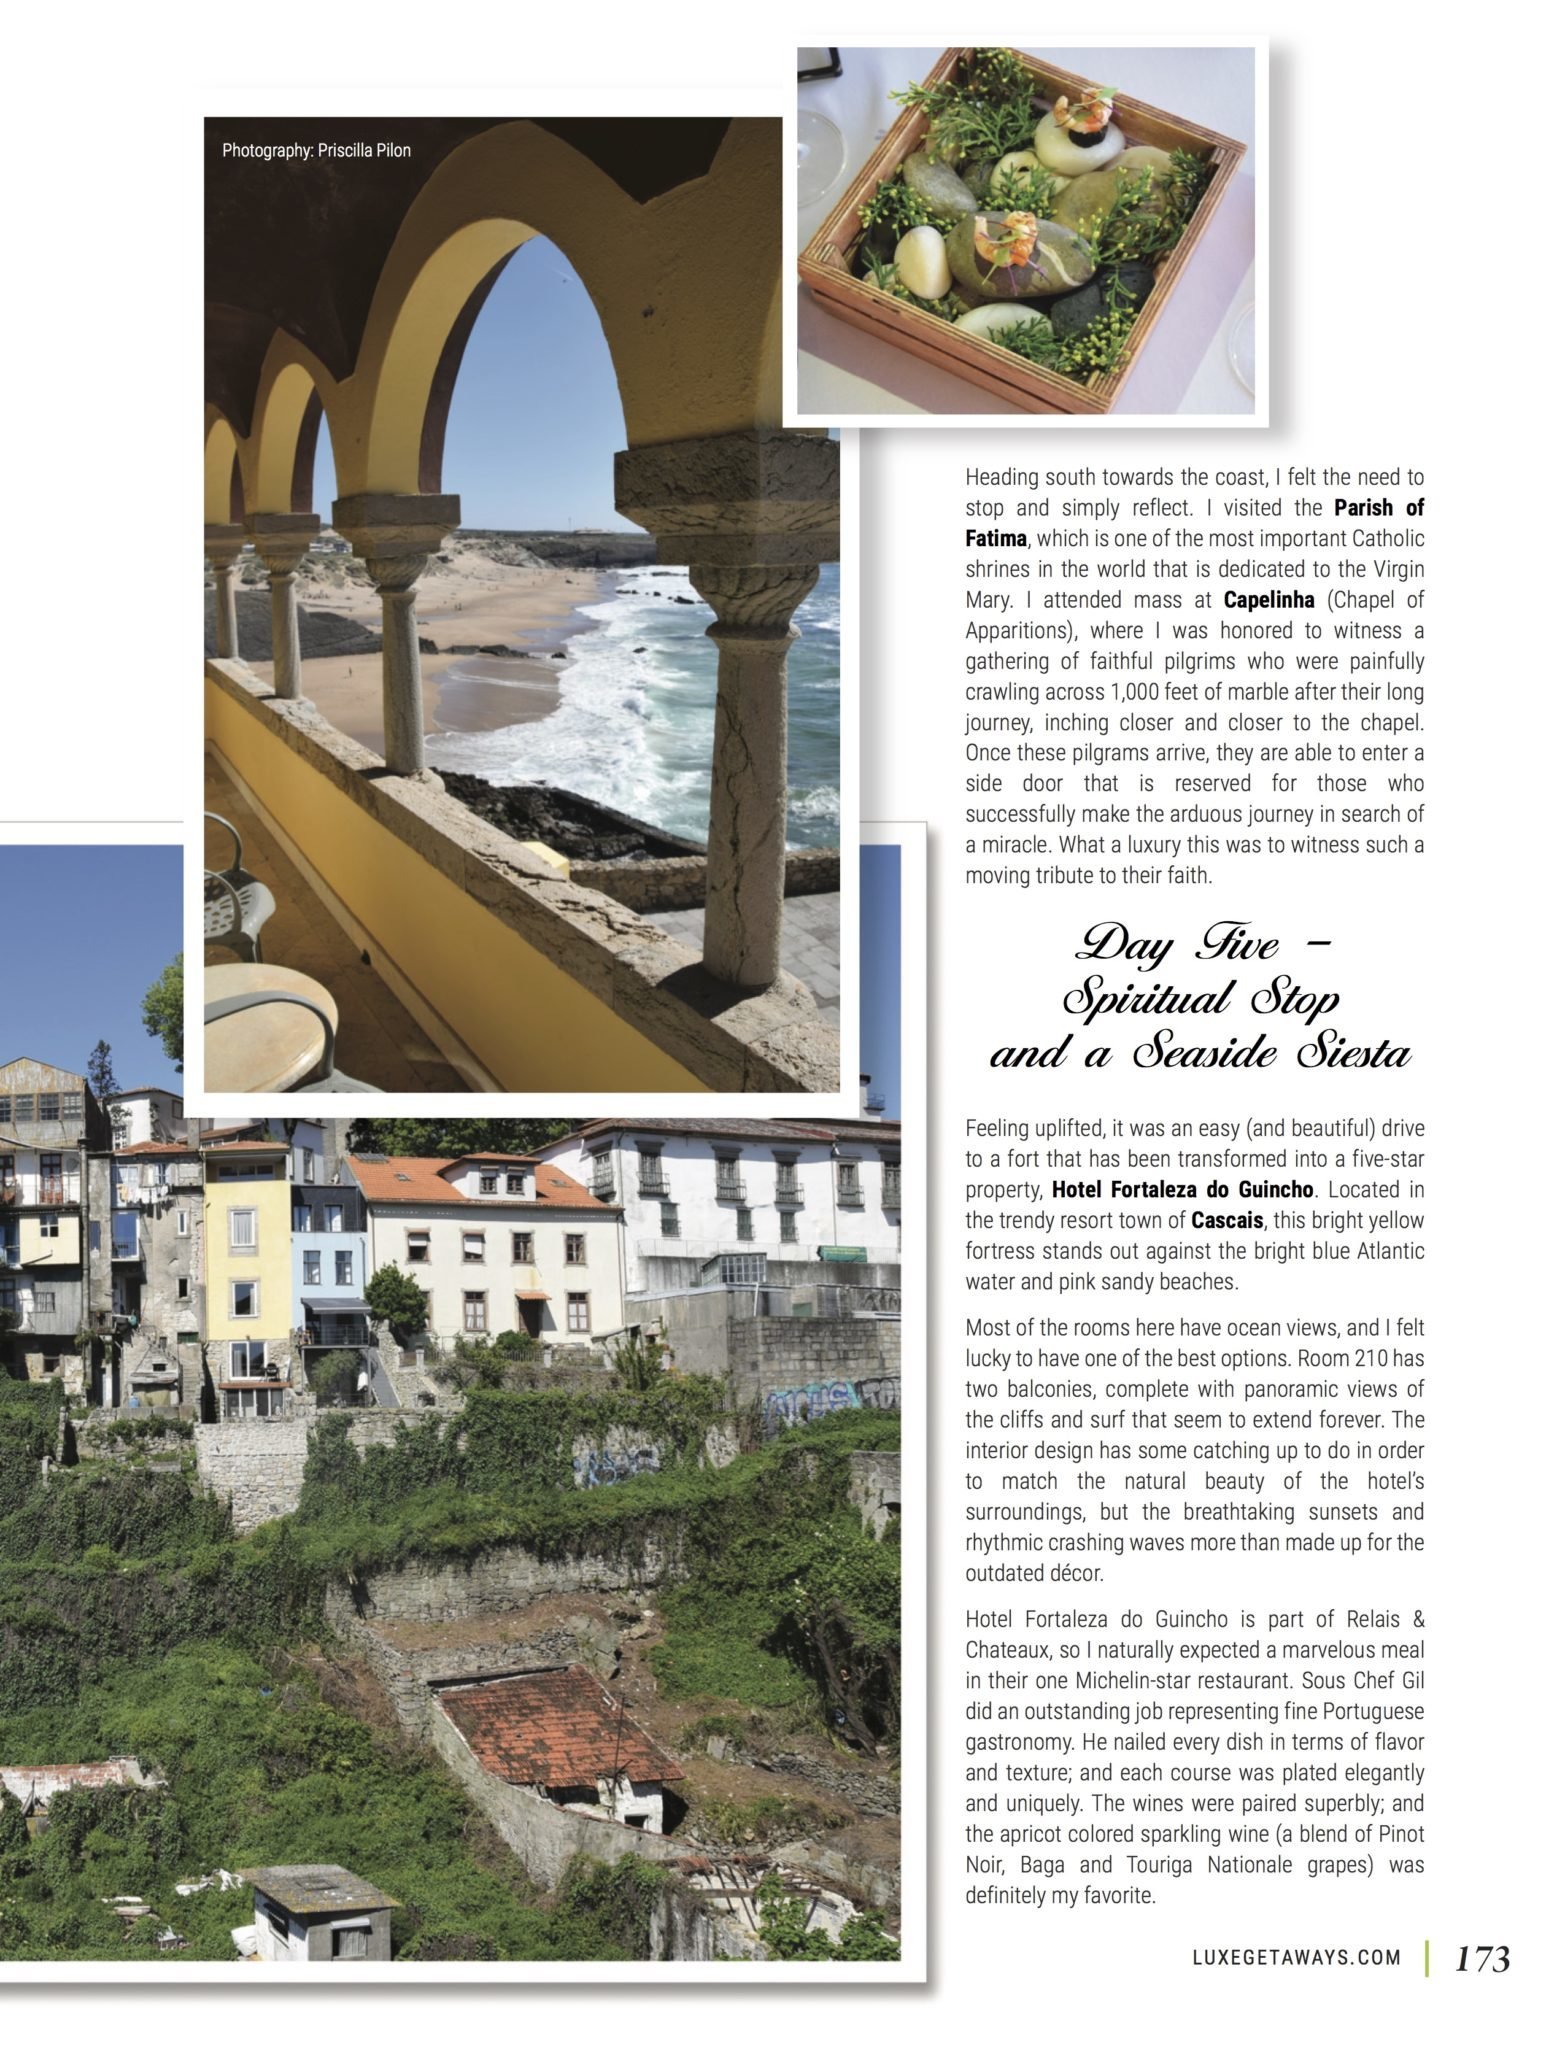 LuxeGetaways - Luxury Travel - Luxury Travel Magazine - Luxe Getaways - Luxury Lifestyle - Fall/Winter 2017 Magazine Issue - Digital Magazine - Travel Magazine - Portugal - Priscilla Pilon